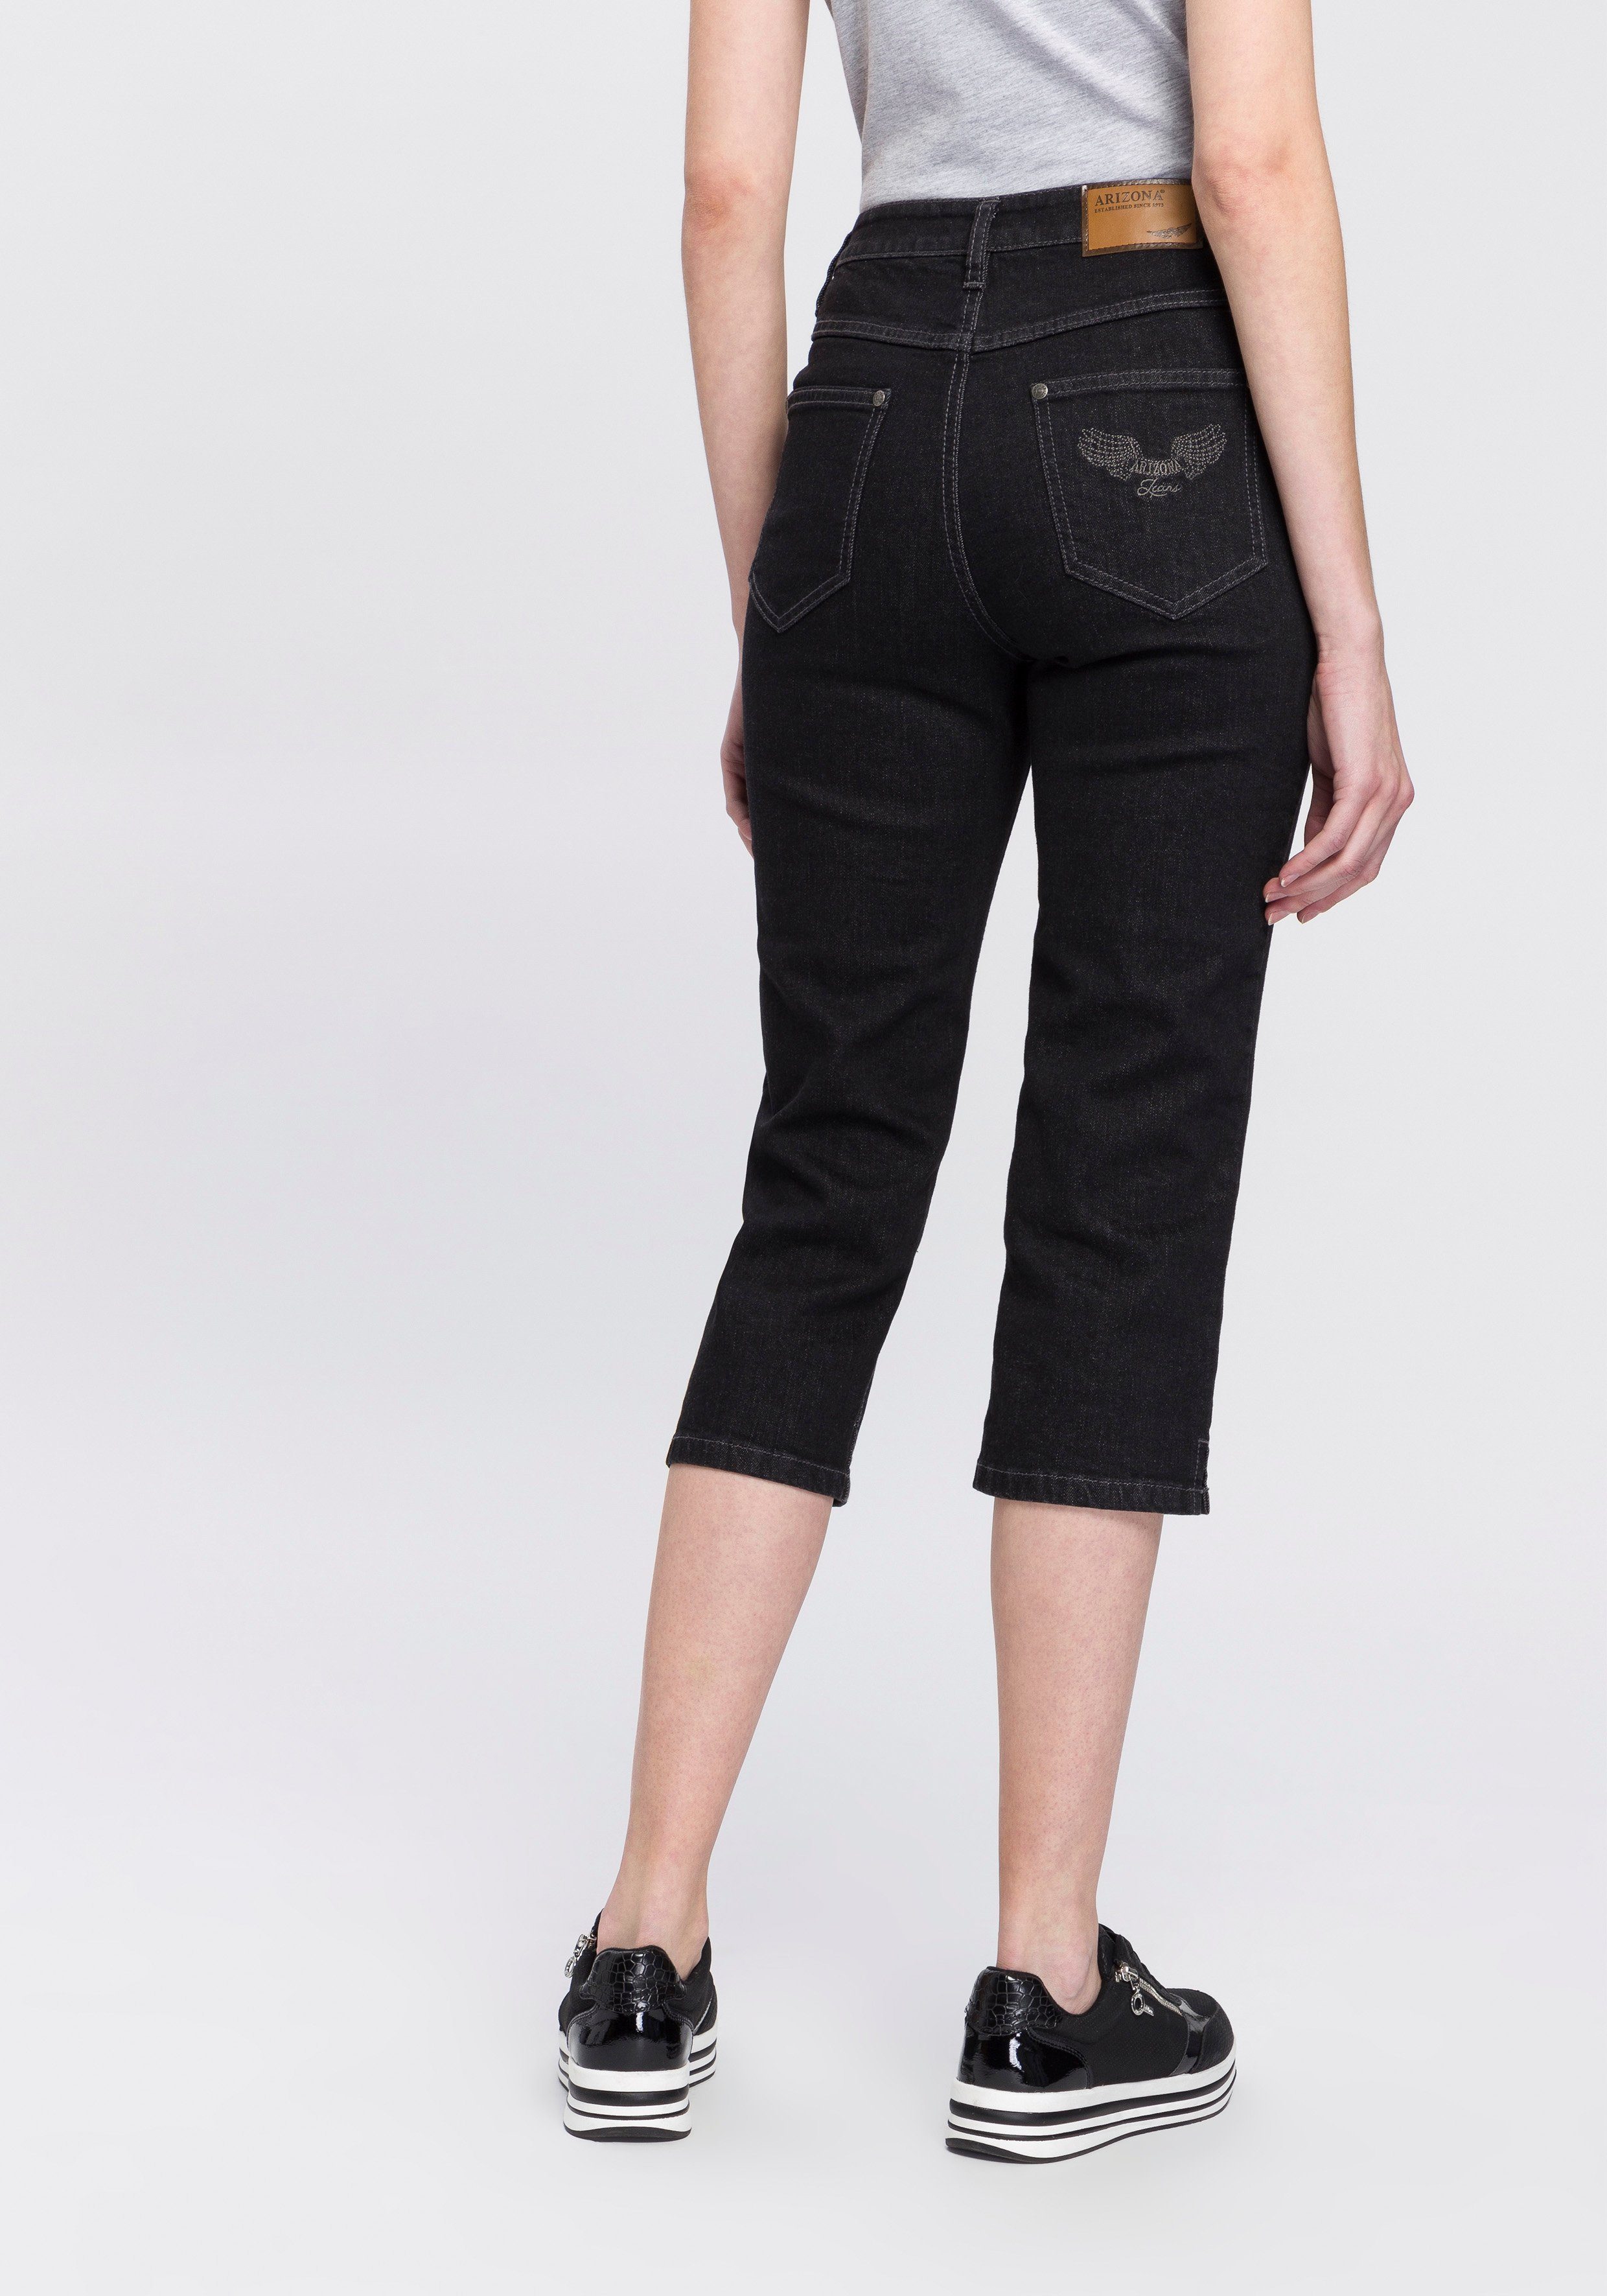 Arizona Caprijeans Comfort-Fit black | High Waist Jeans